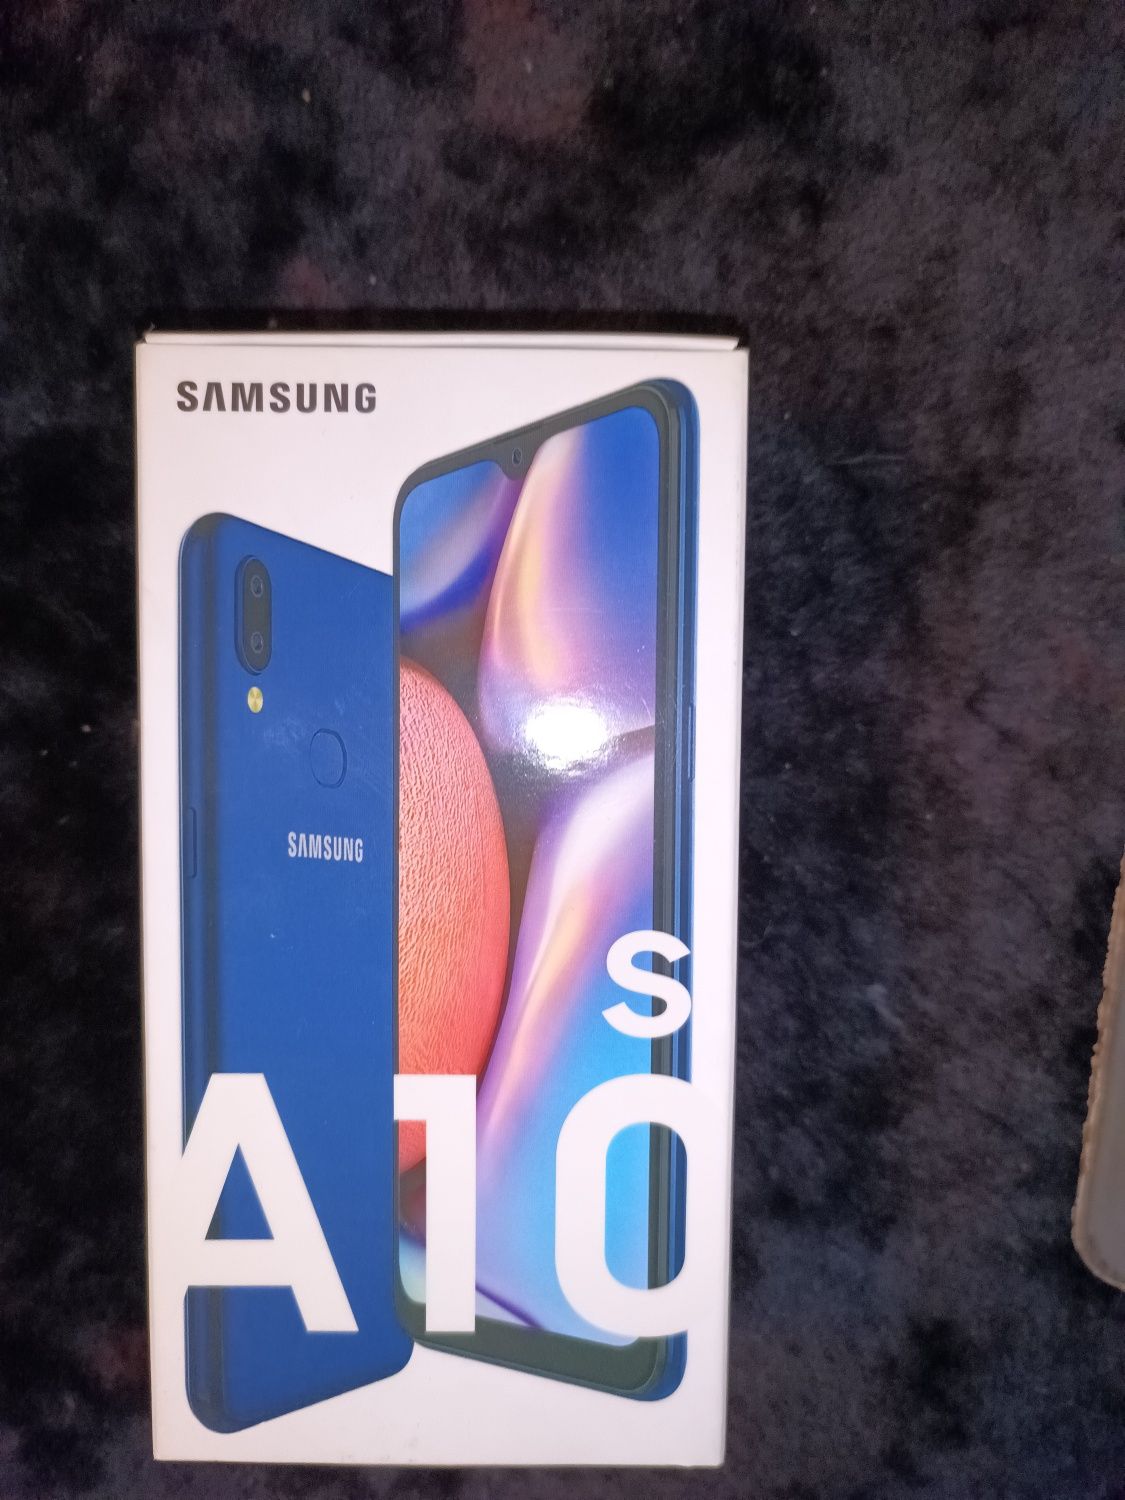 Samsung galaxy A10s